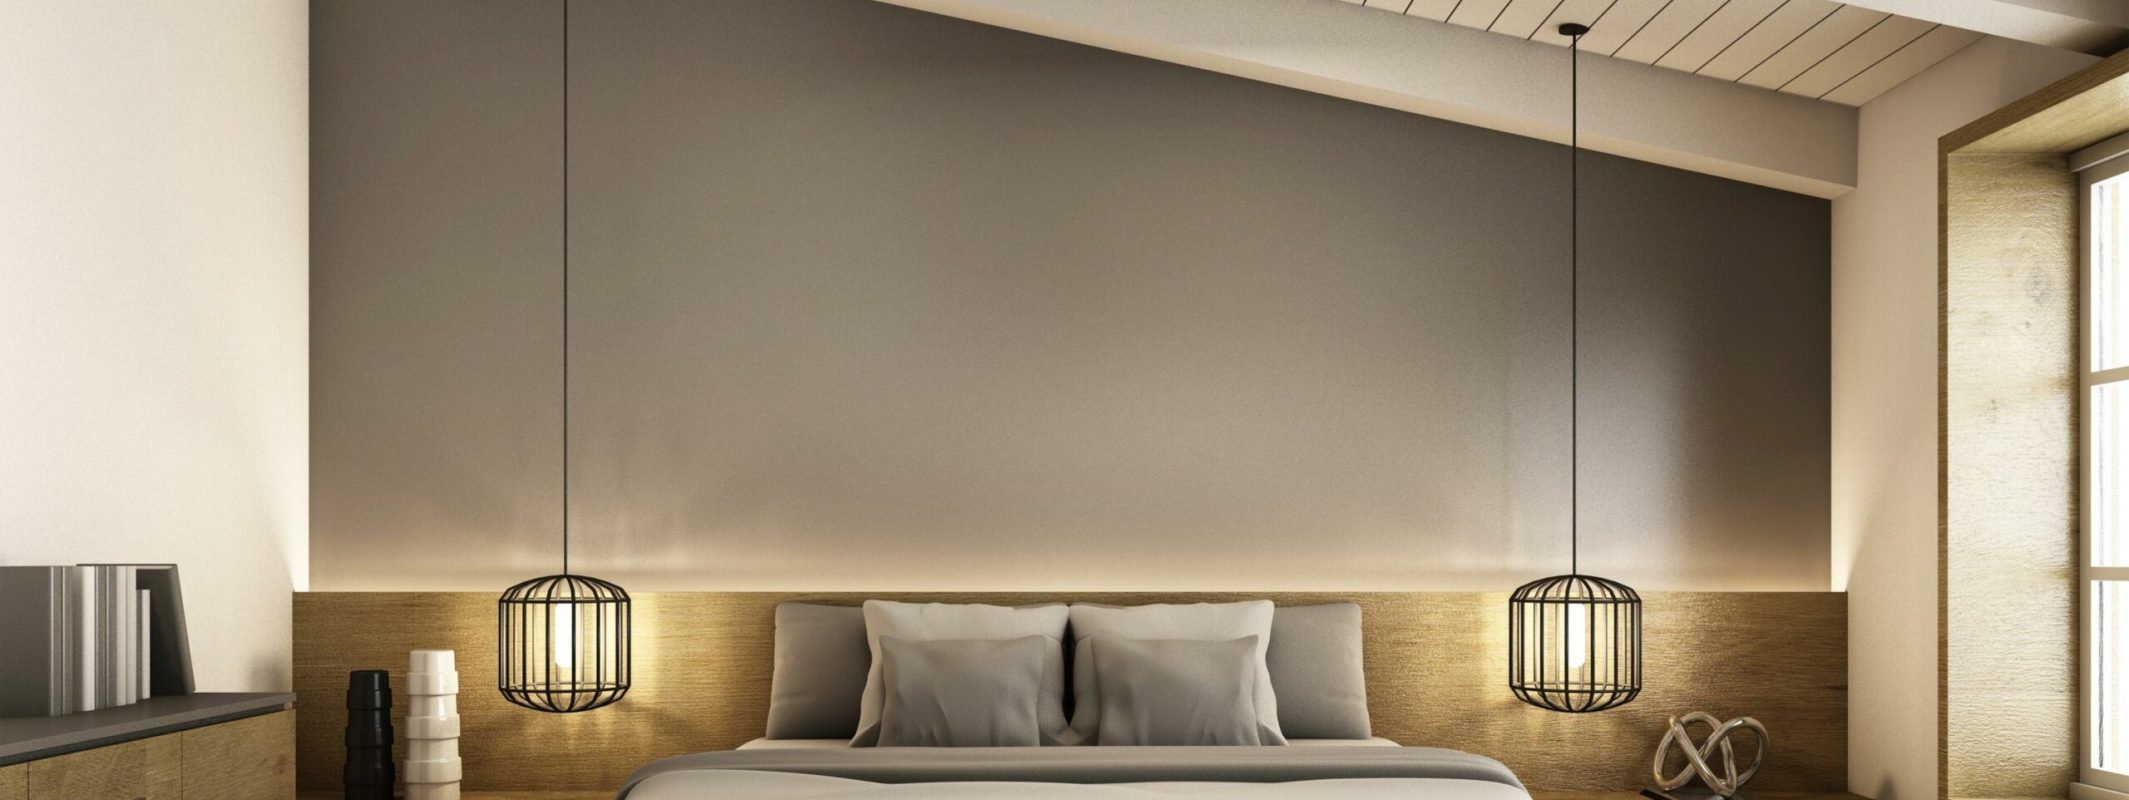 raumgestalter schlafzimmer mit abgepasstem teppich vor dem bett holzdielenboden hängelamoen bleher raumausstatter in nürtingen